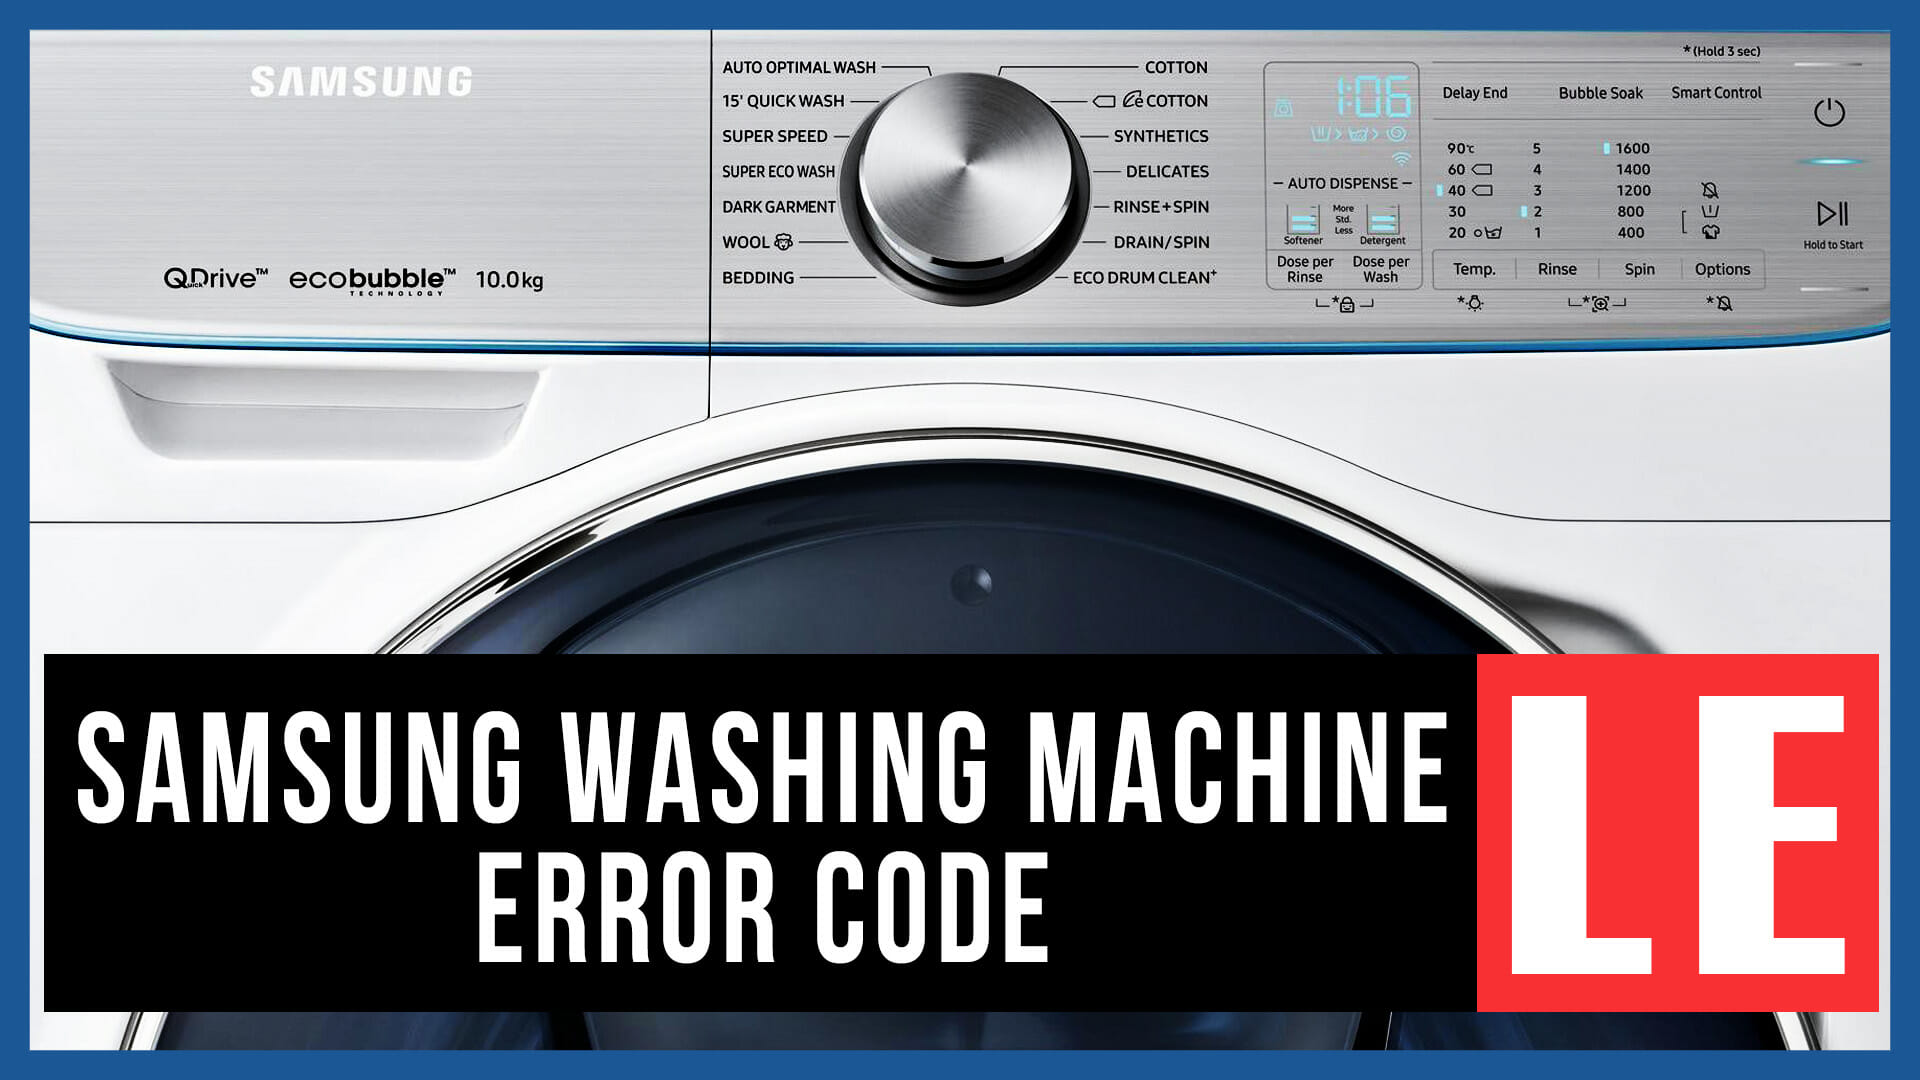 samsung washer problem solving